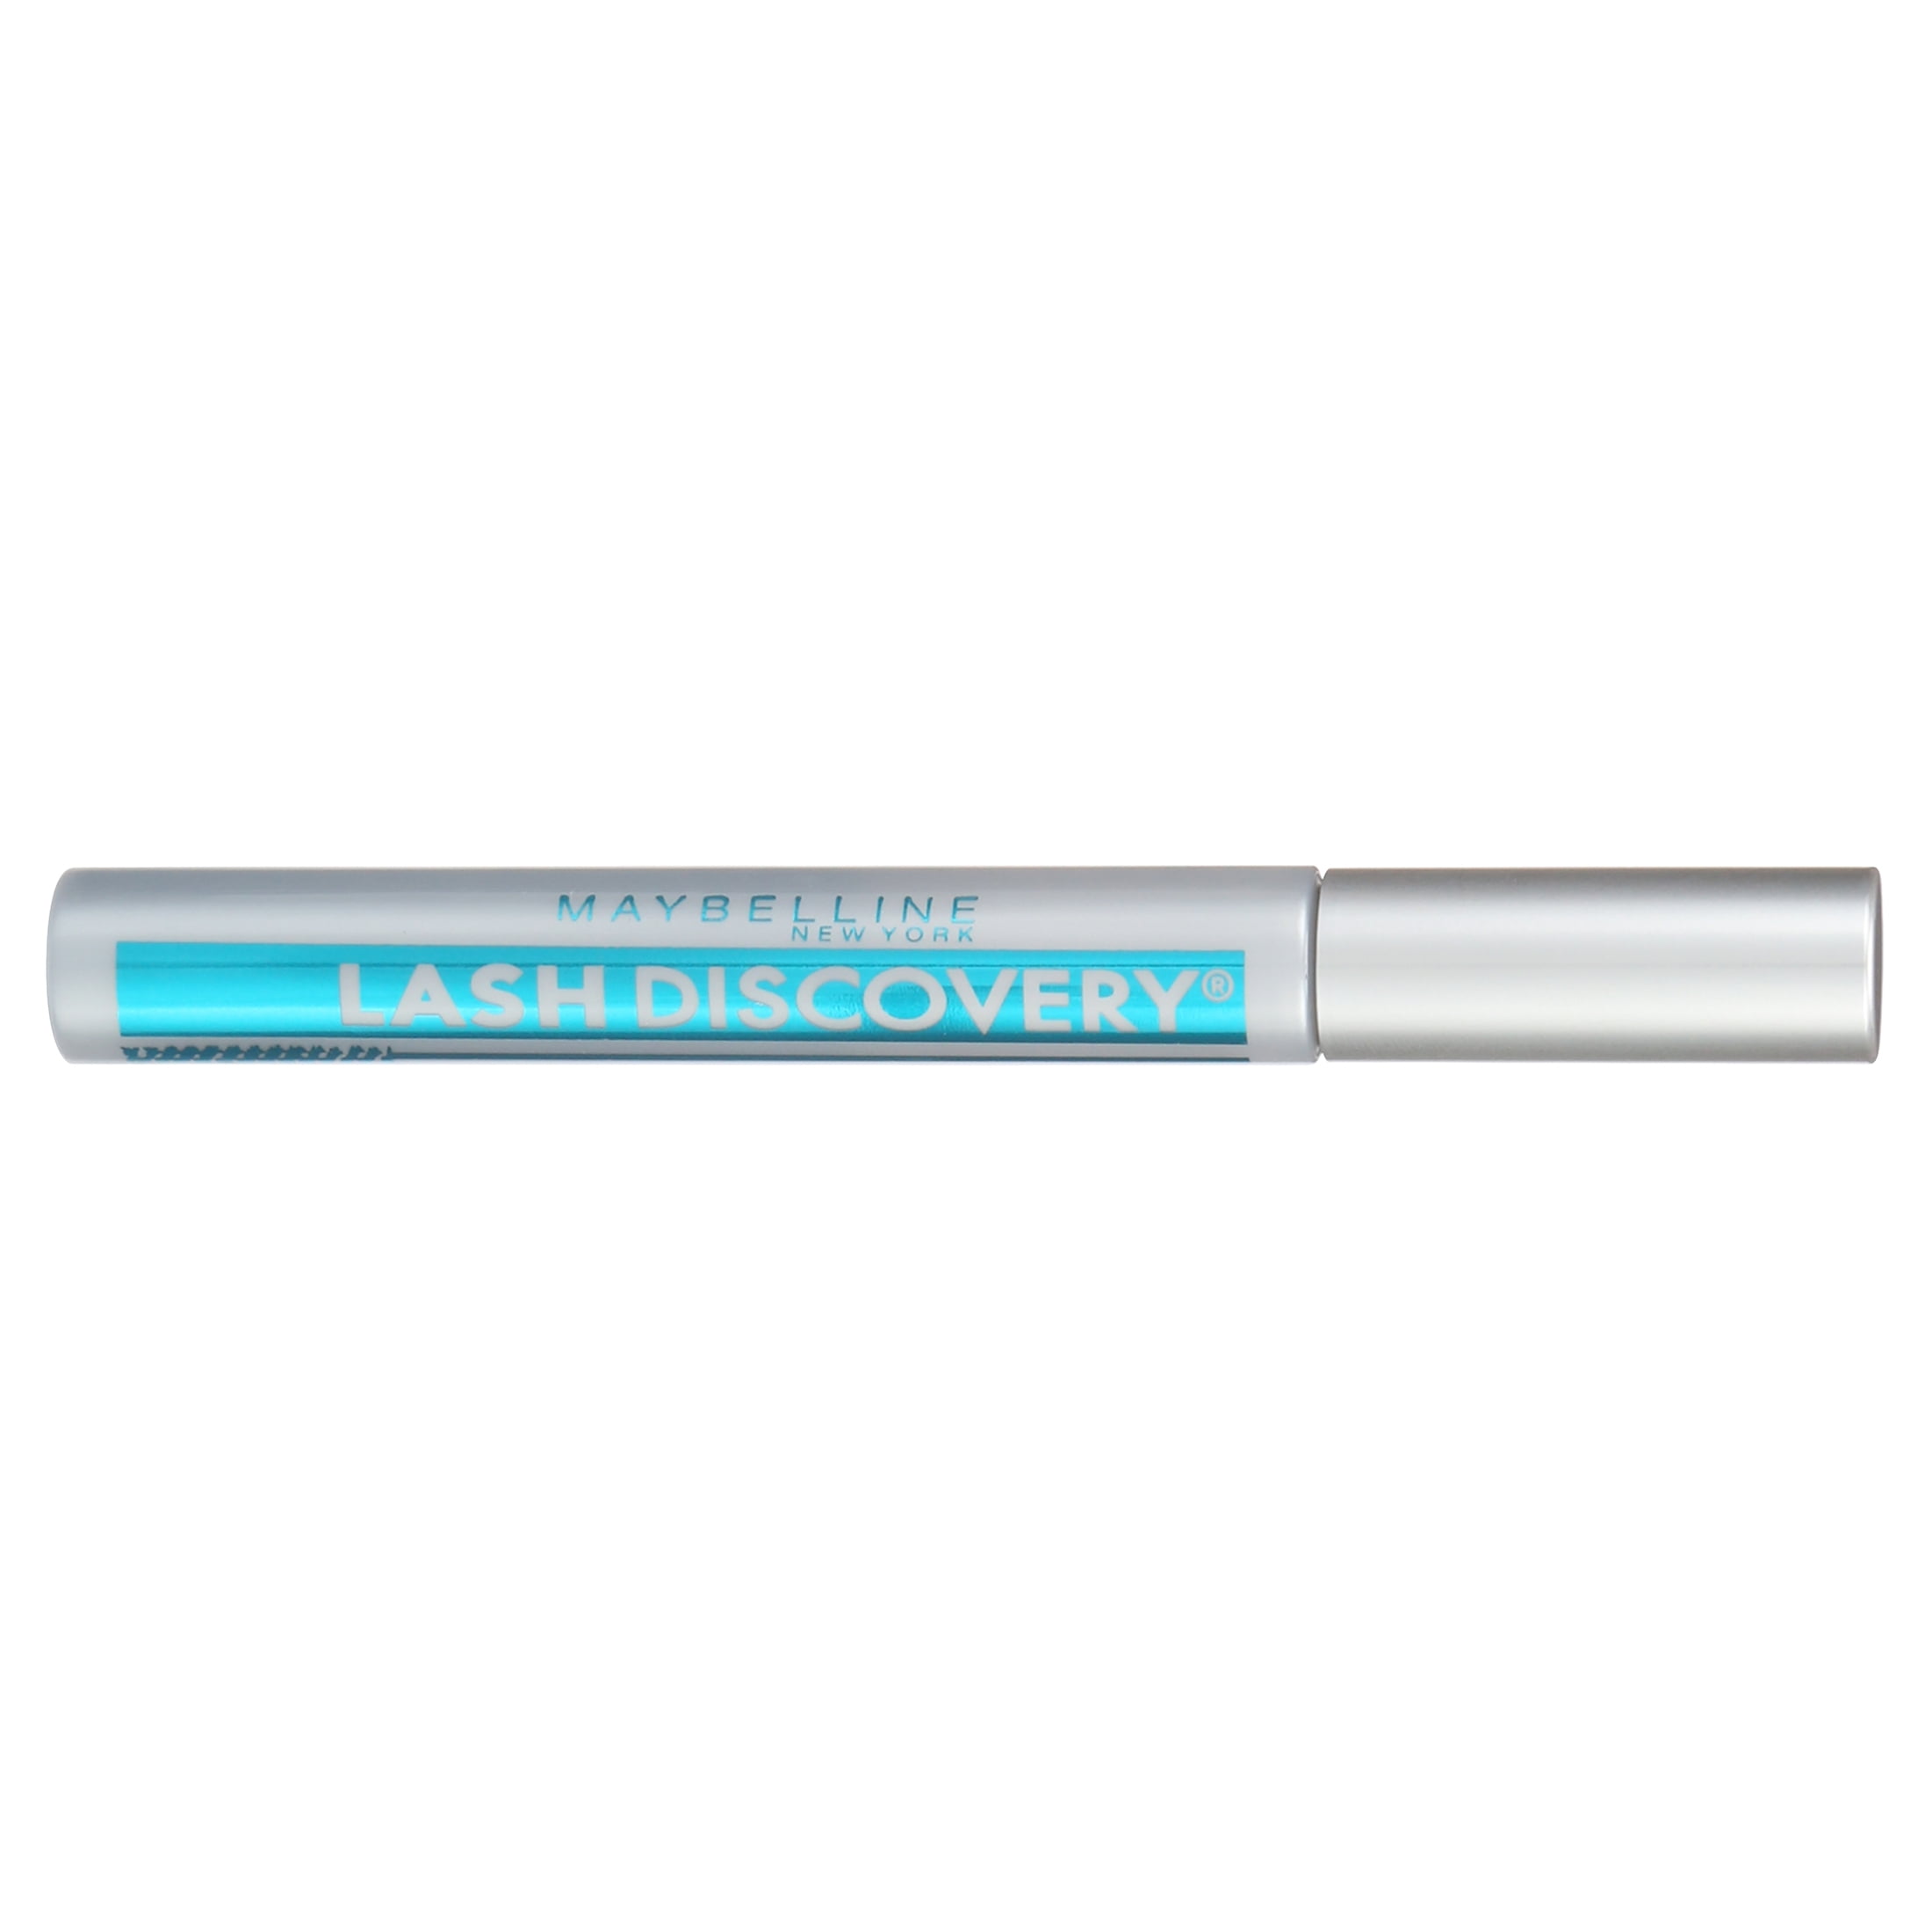 Lash Discovery Mini-Brush Waterproof Mascara, Very Black -